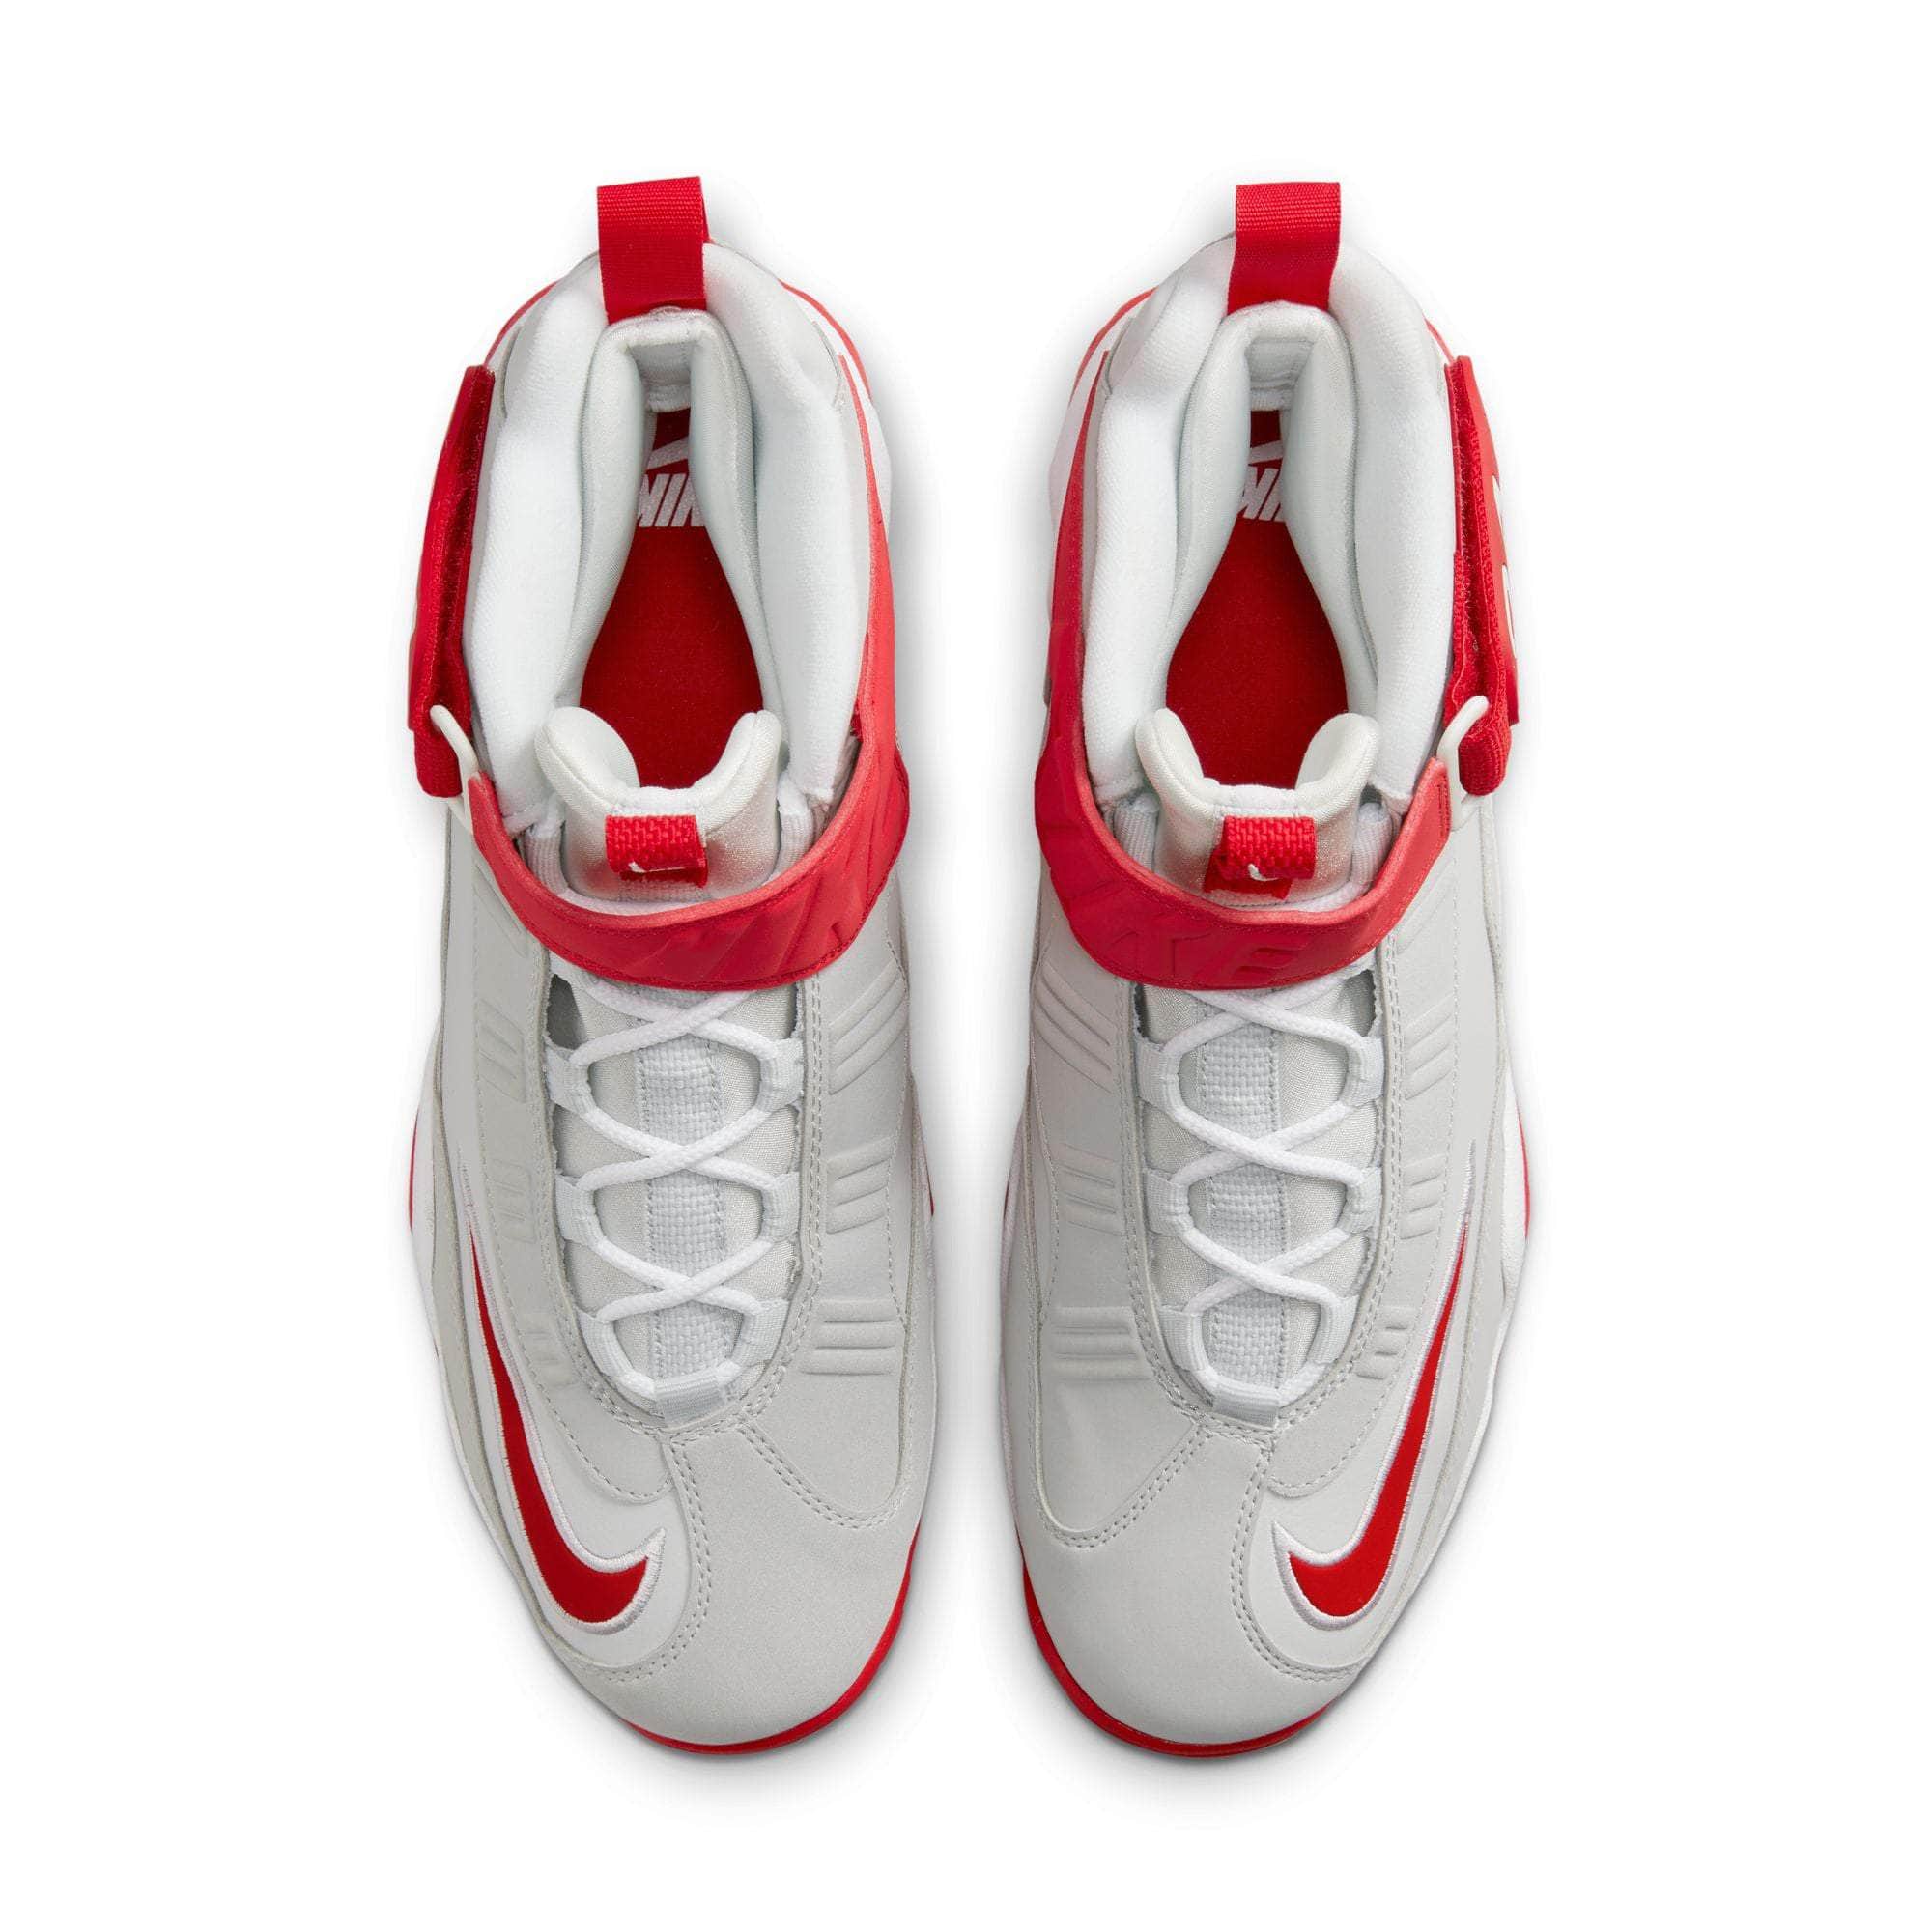 Nike Air Griffey Max 1 Size 9 Cincinnati Reds 354912-007 Authentic 2012